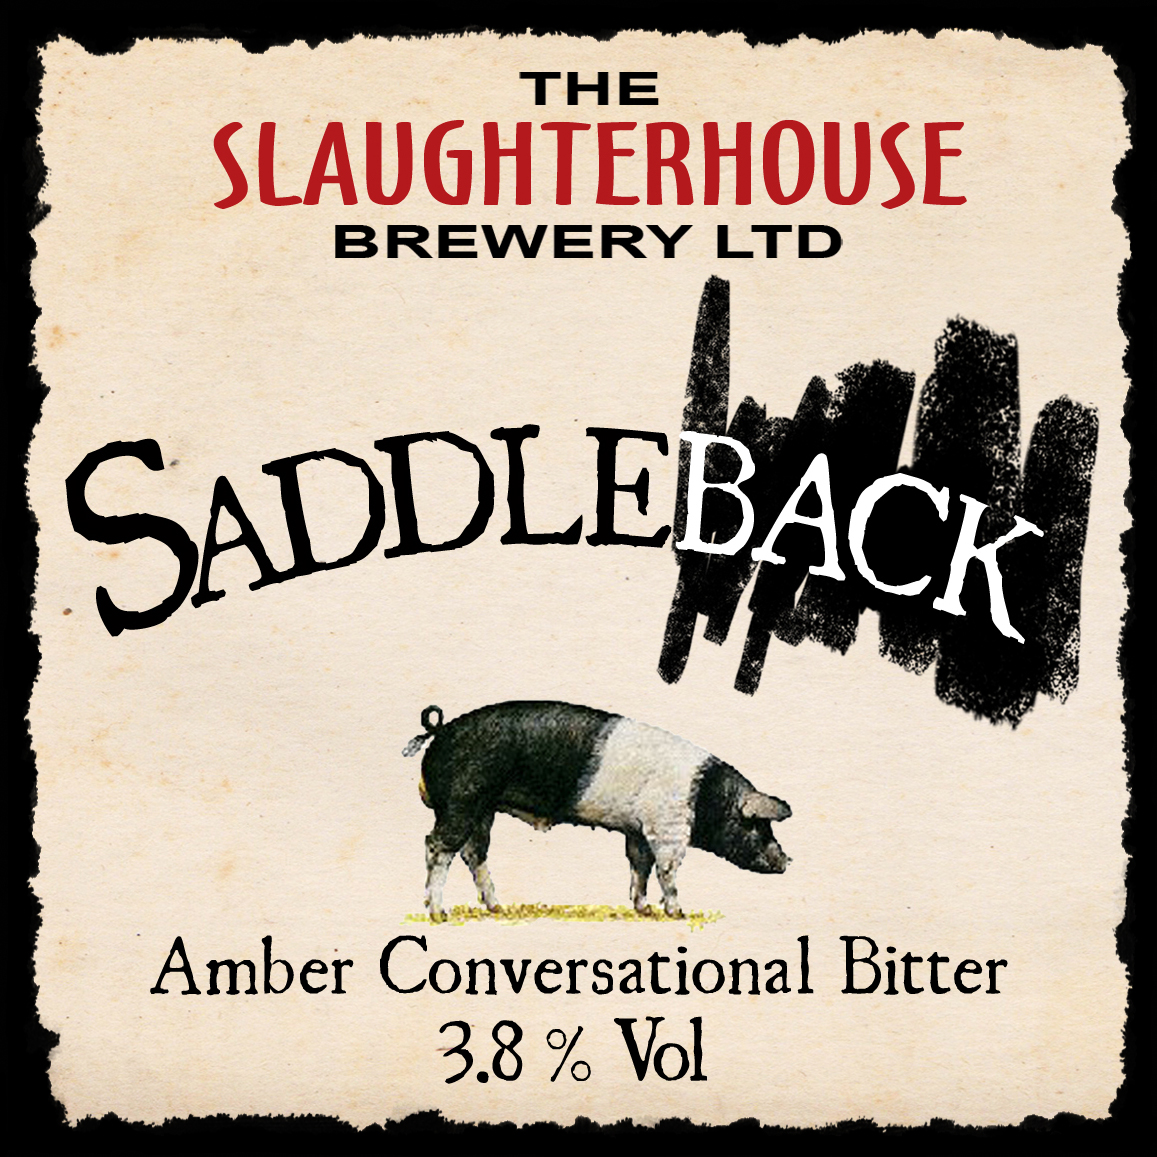 Saddleback Best Bitter from Slaughterhouse Brewery